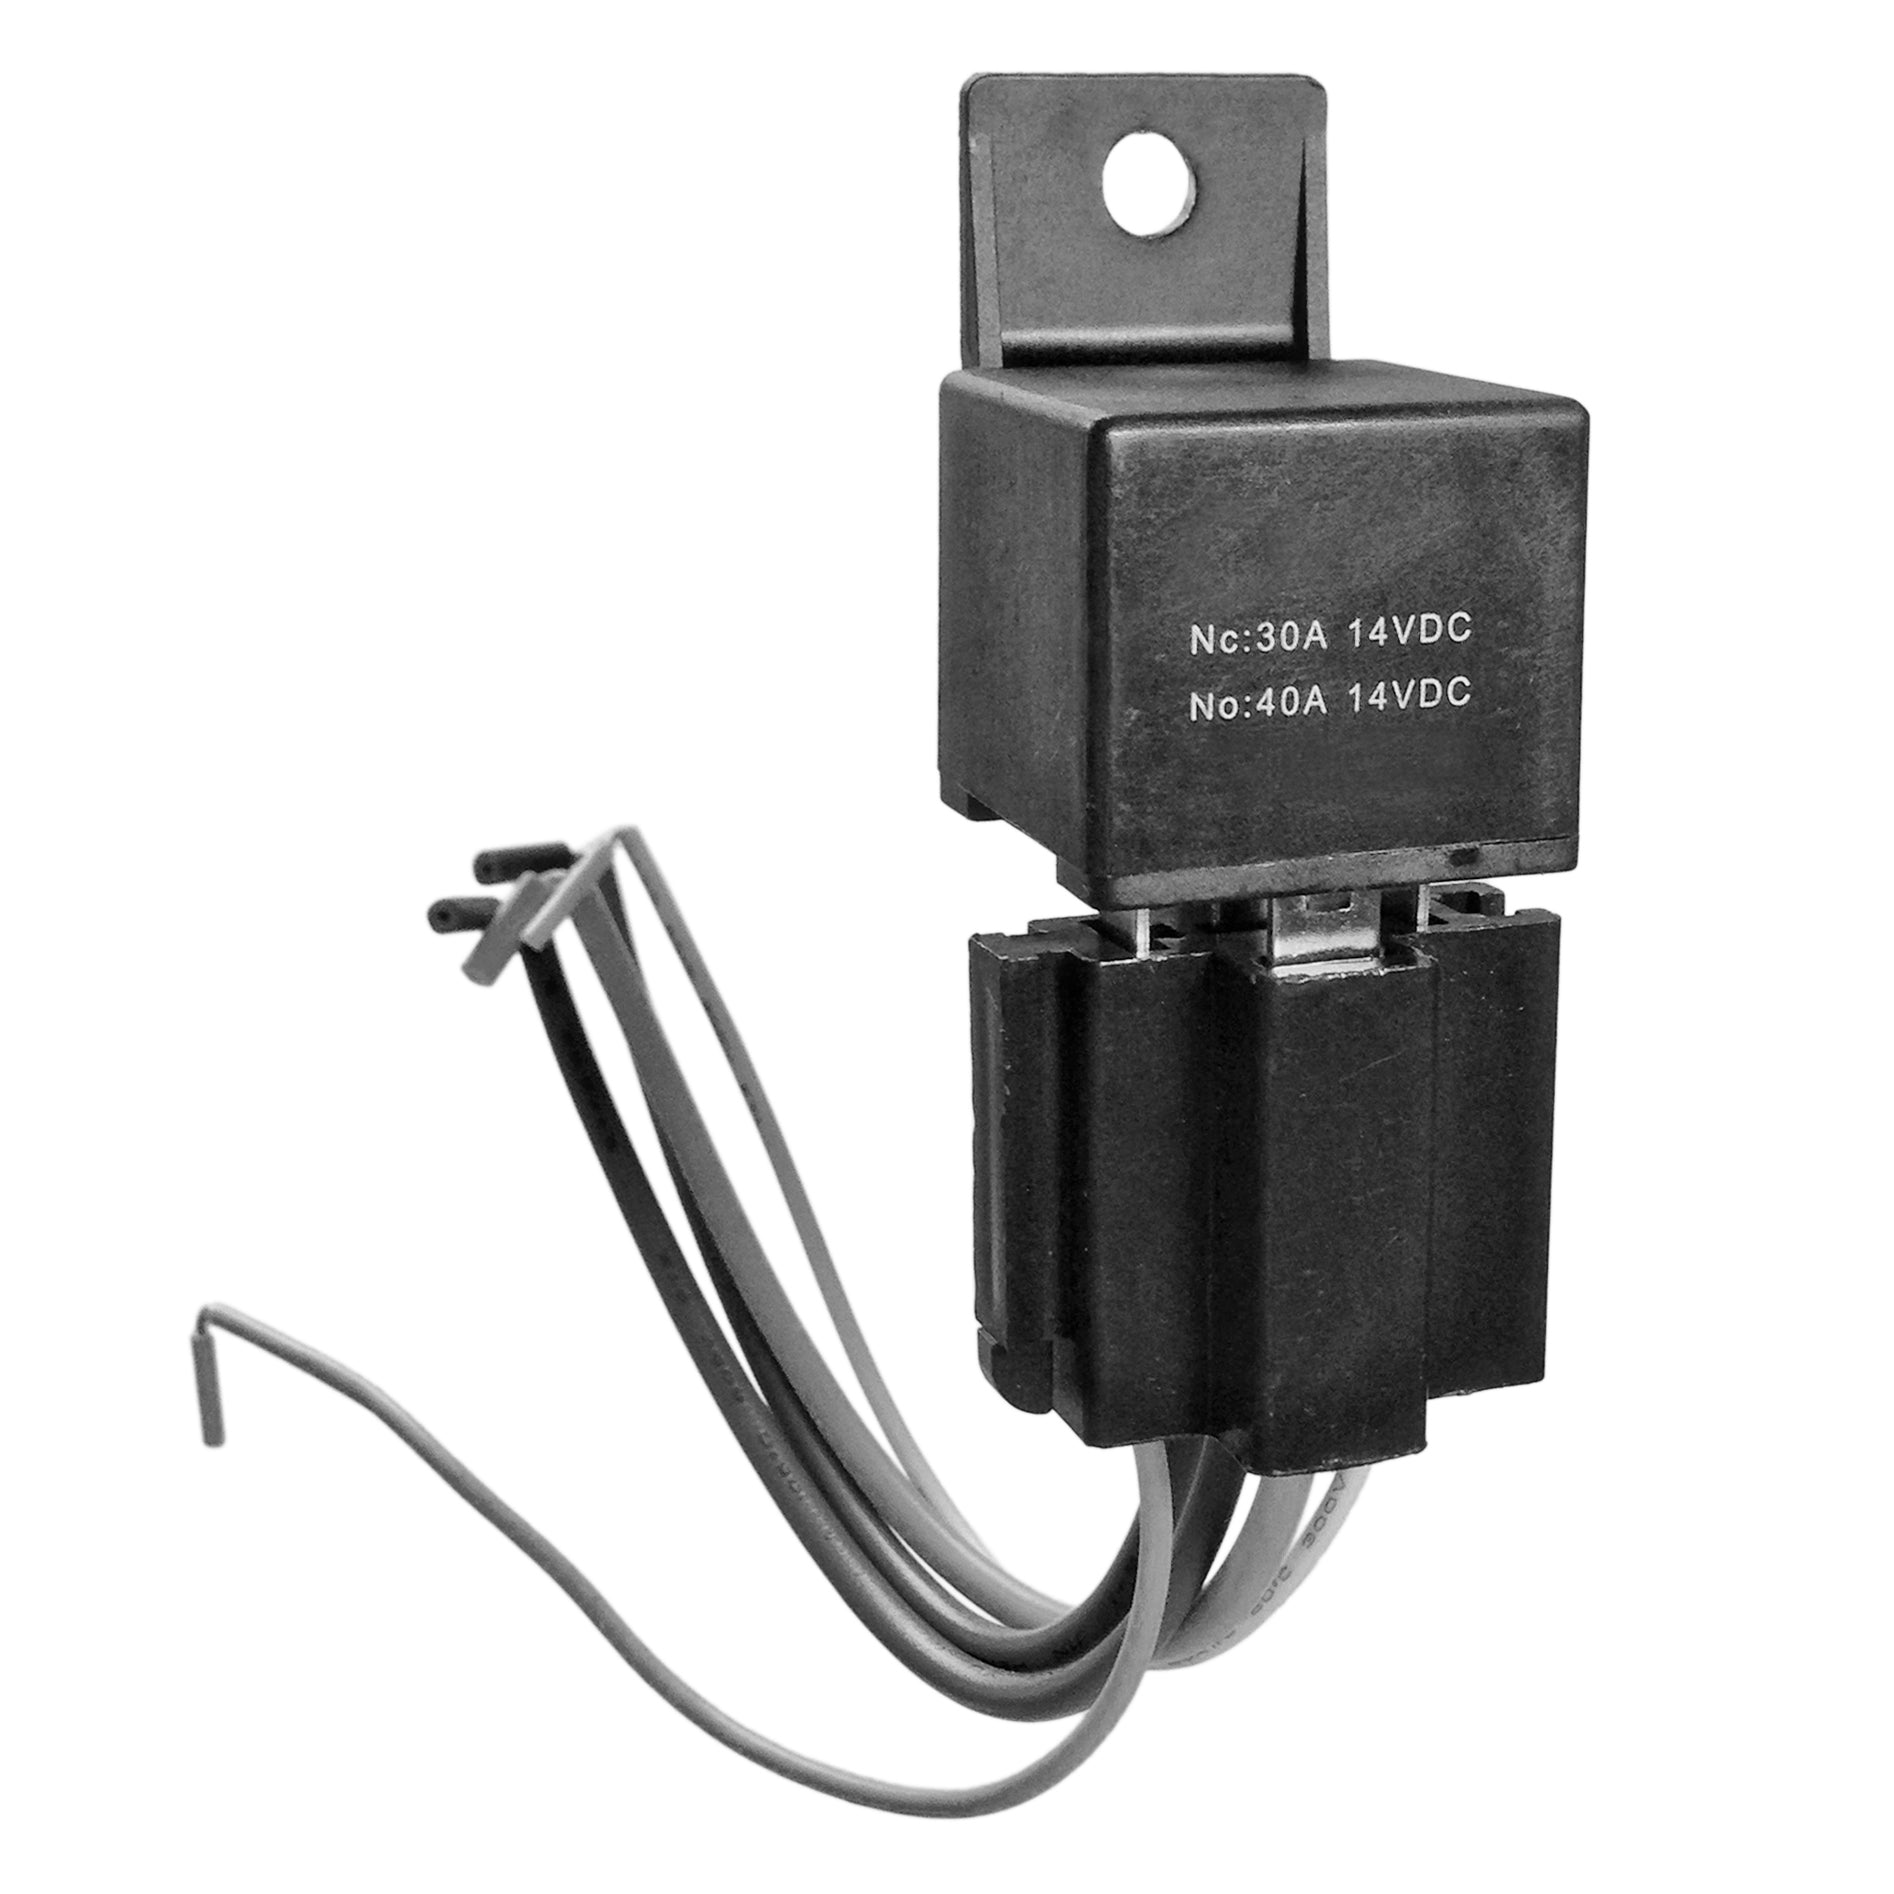 sūsa electrical relay, 30A, 5-pin Bosch-style